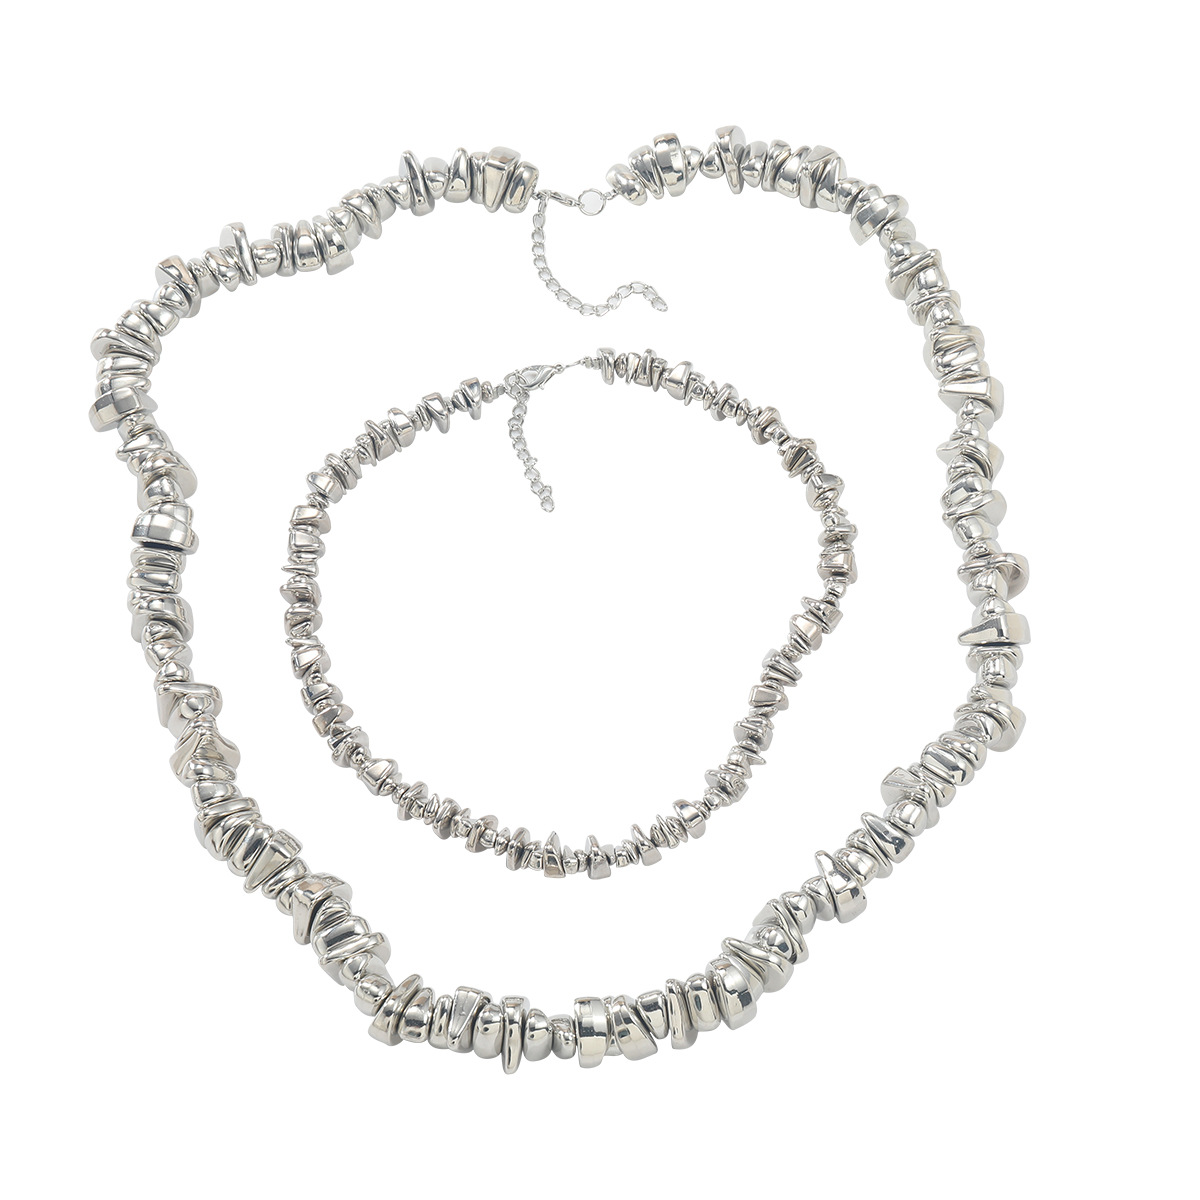 2:Two-piece necklace set